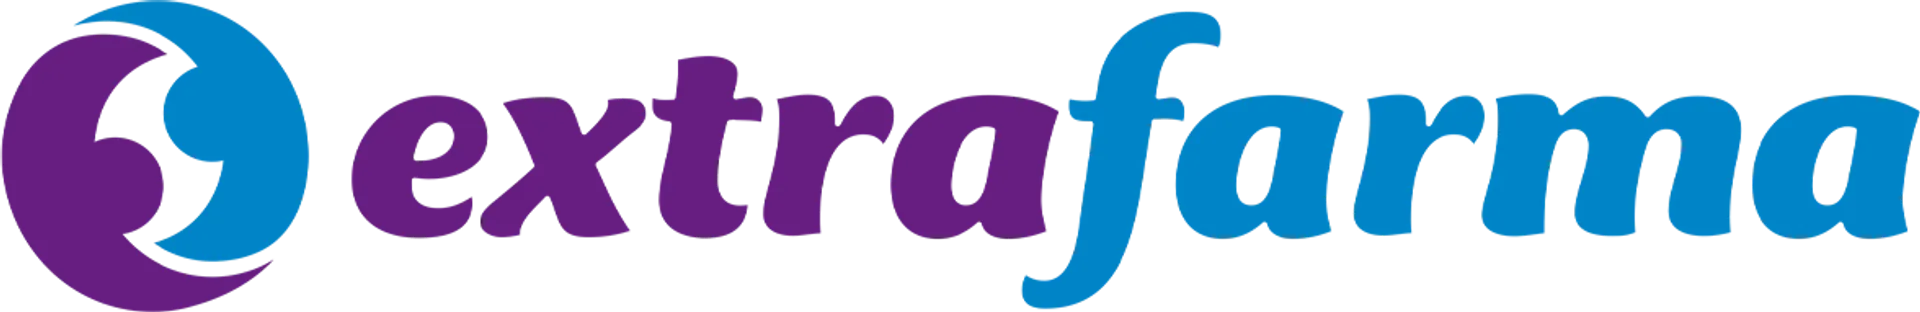 EXTRAFARMA logo